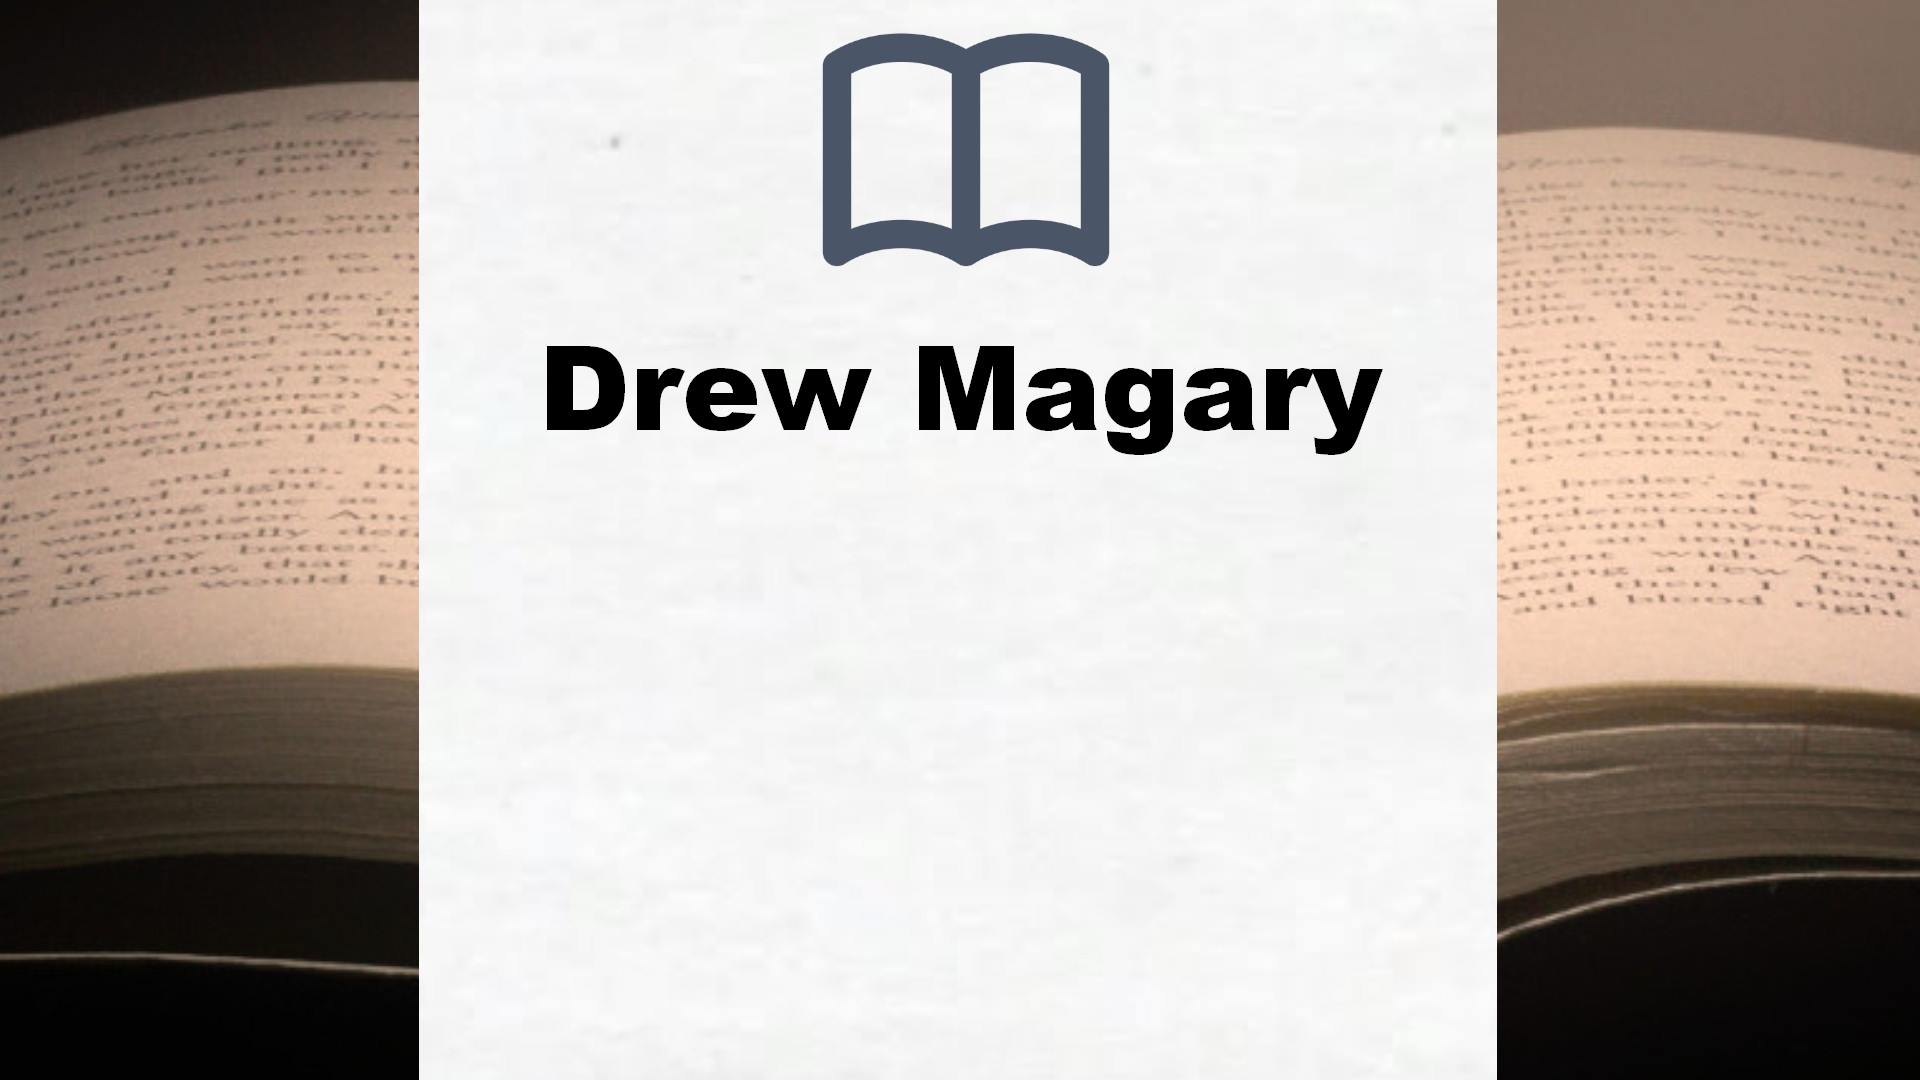 Libros Drew Magary